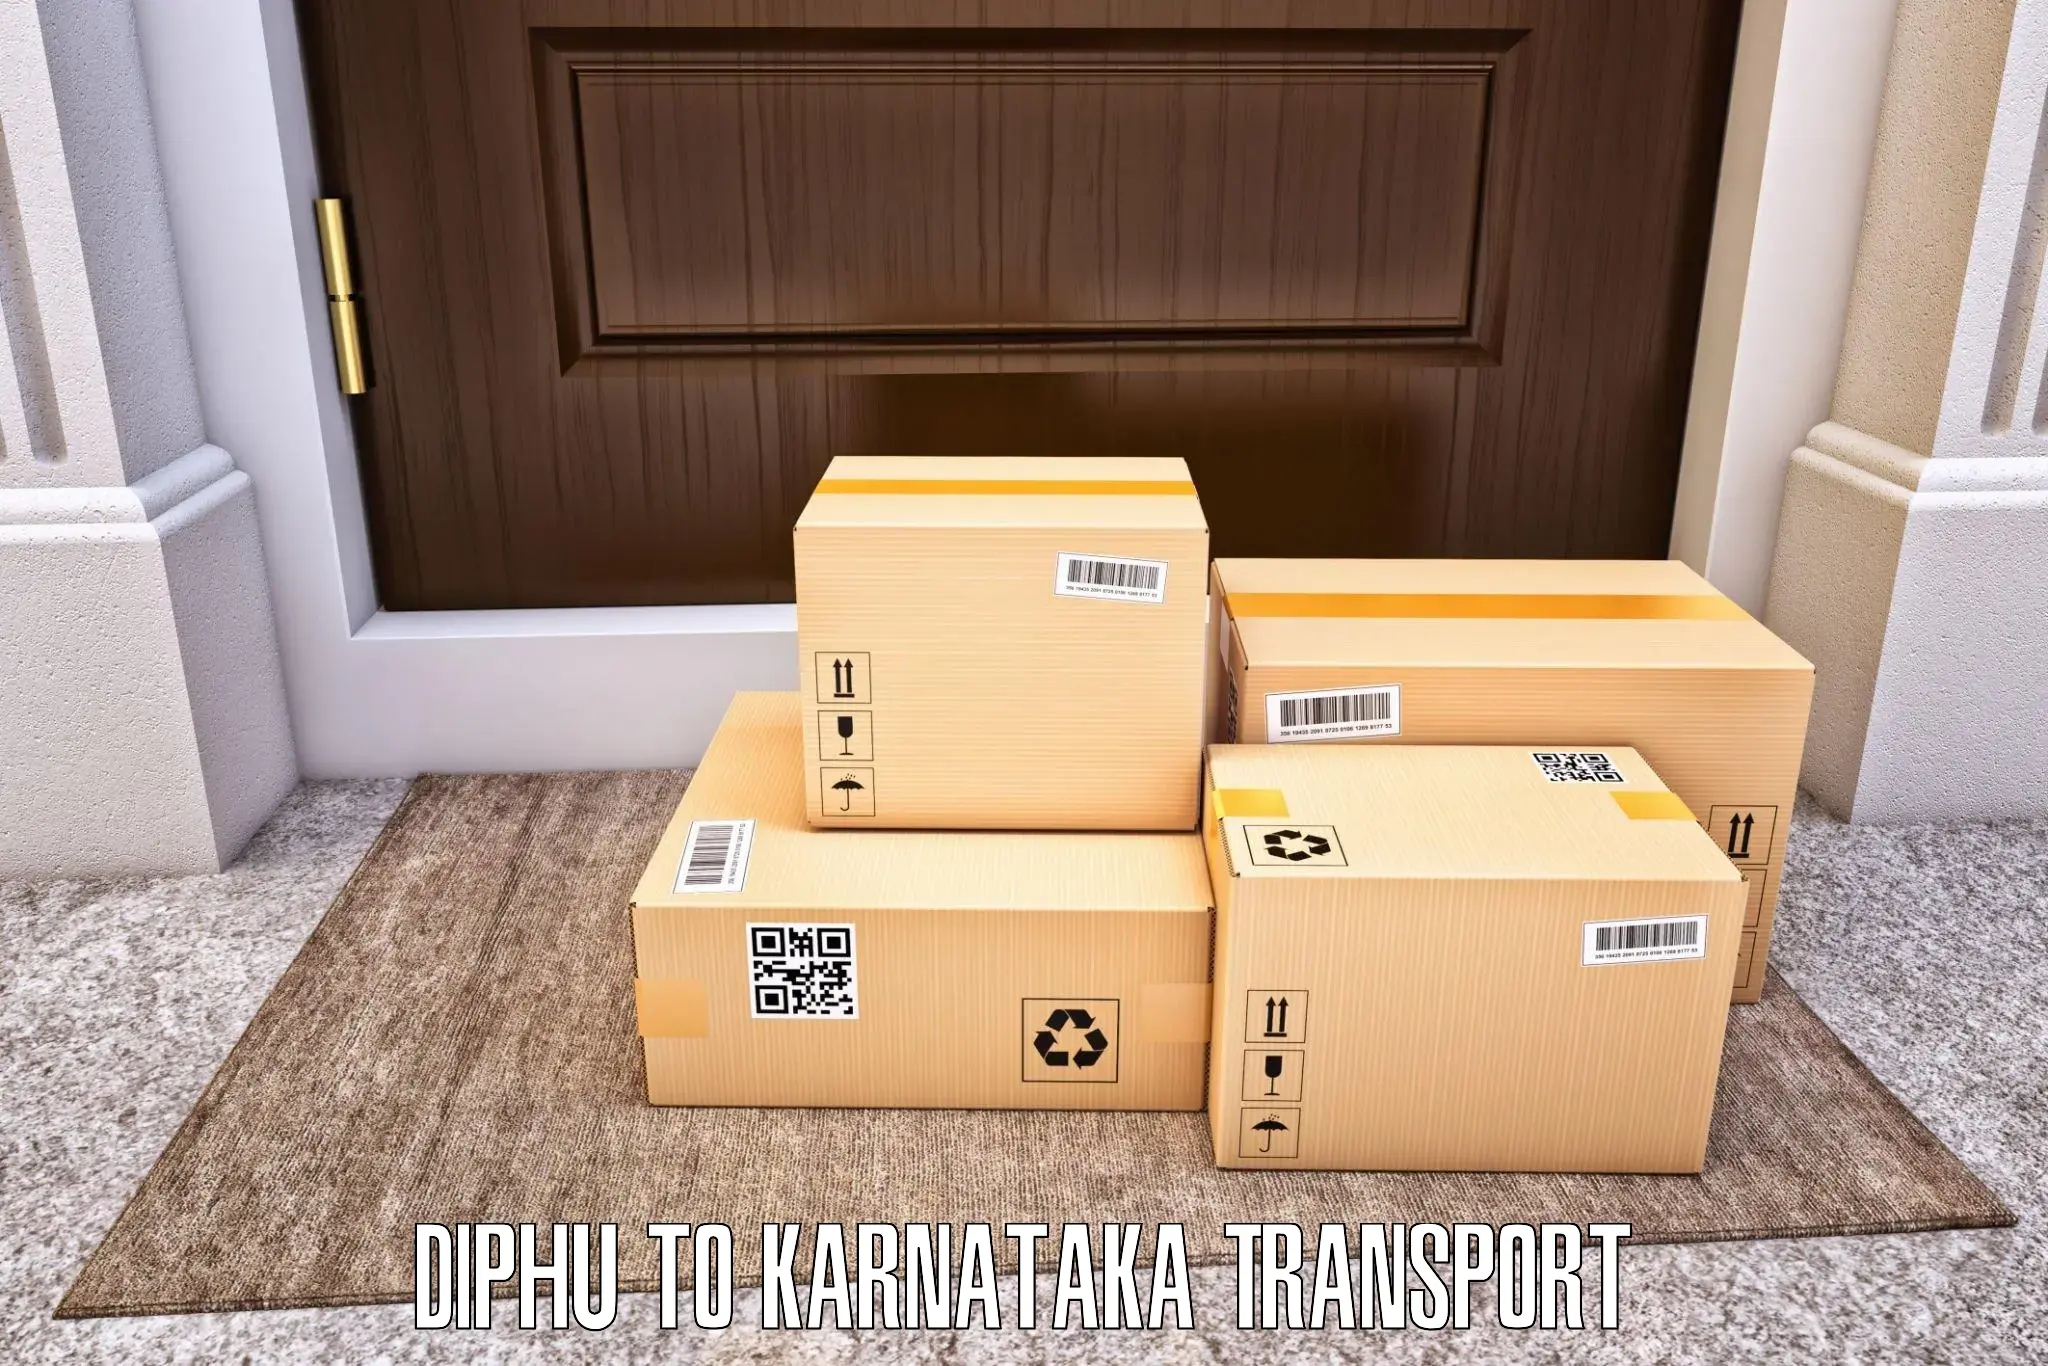 Commercial transport service Diphu to Sagara